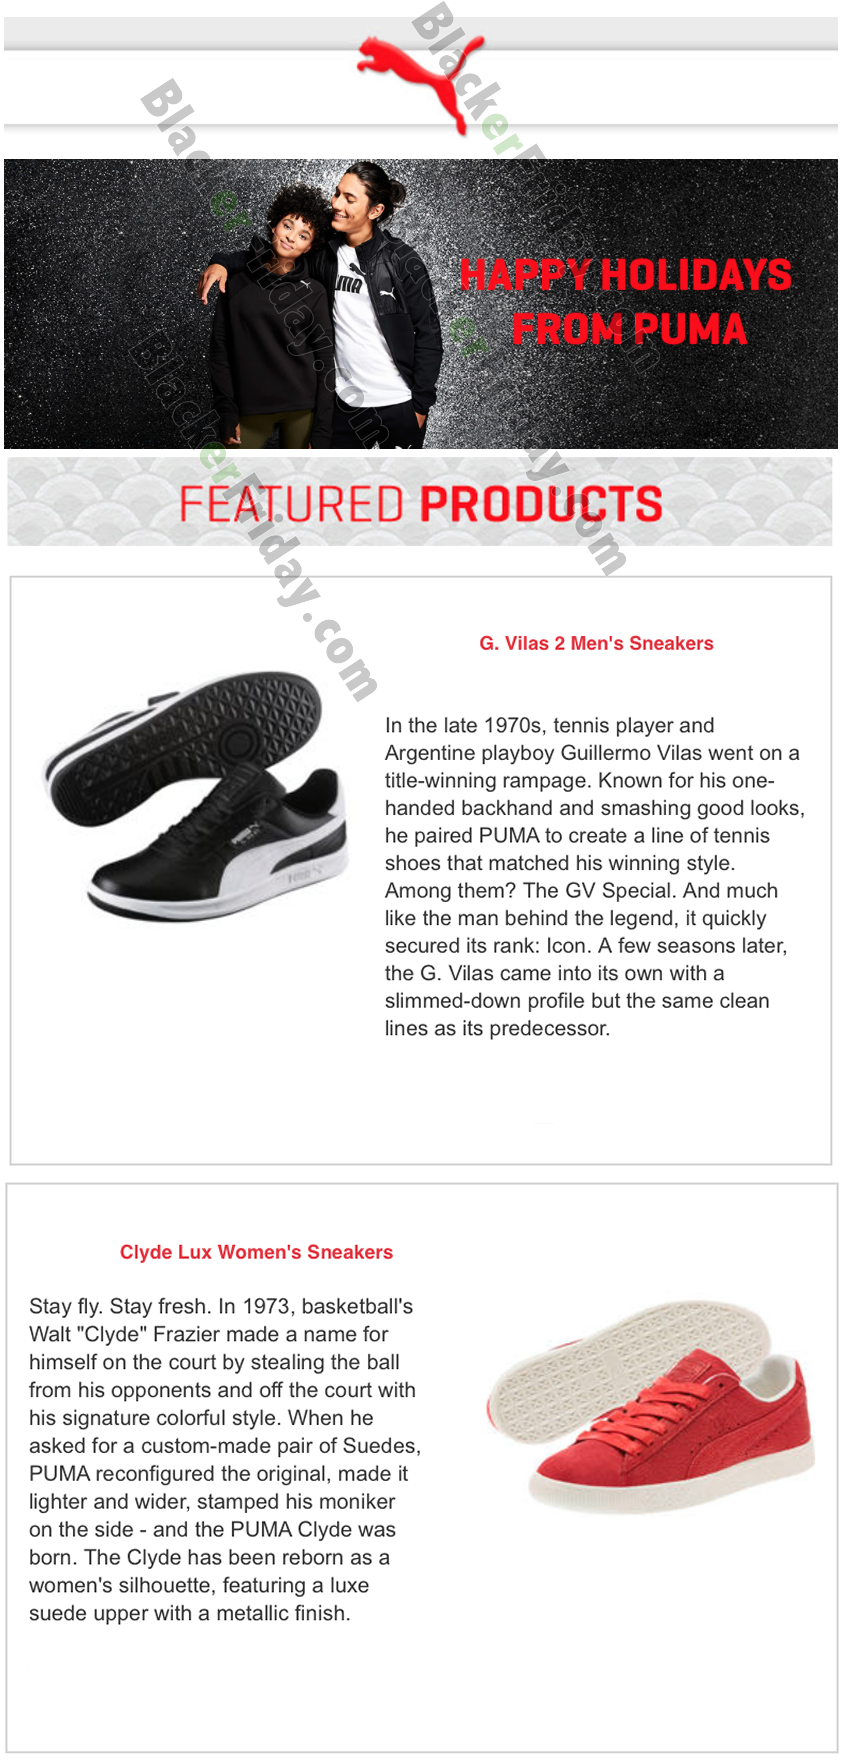 black friday deals on puma shoes